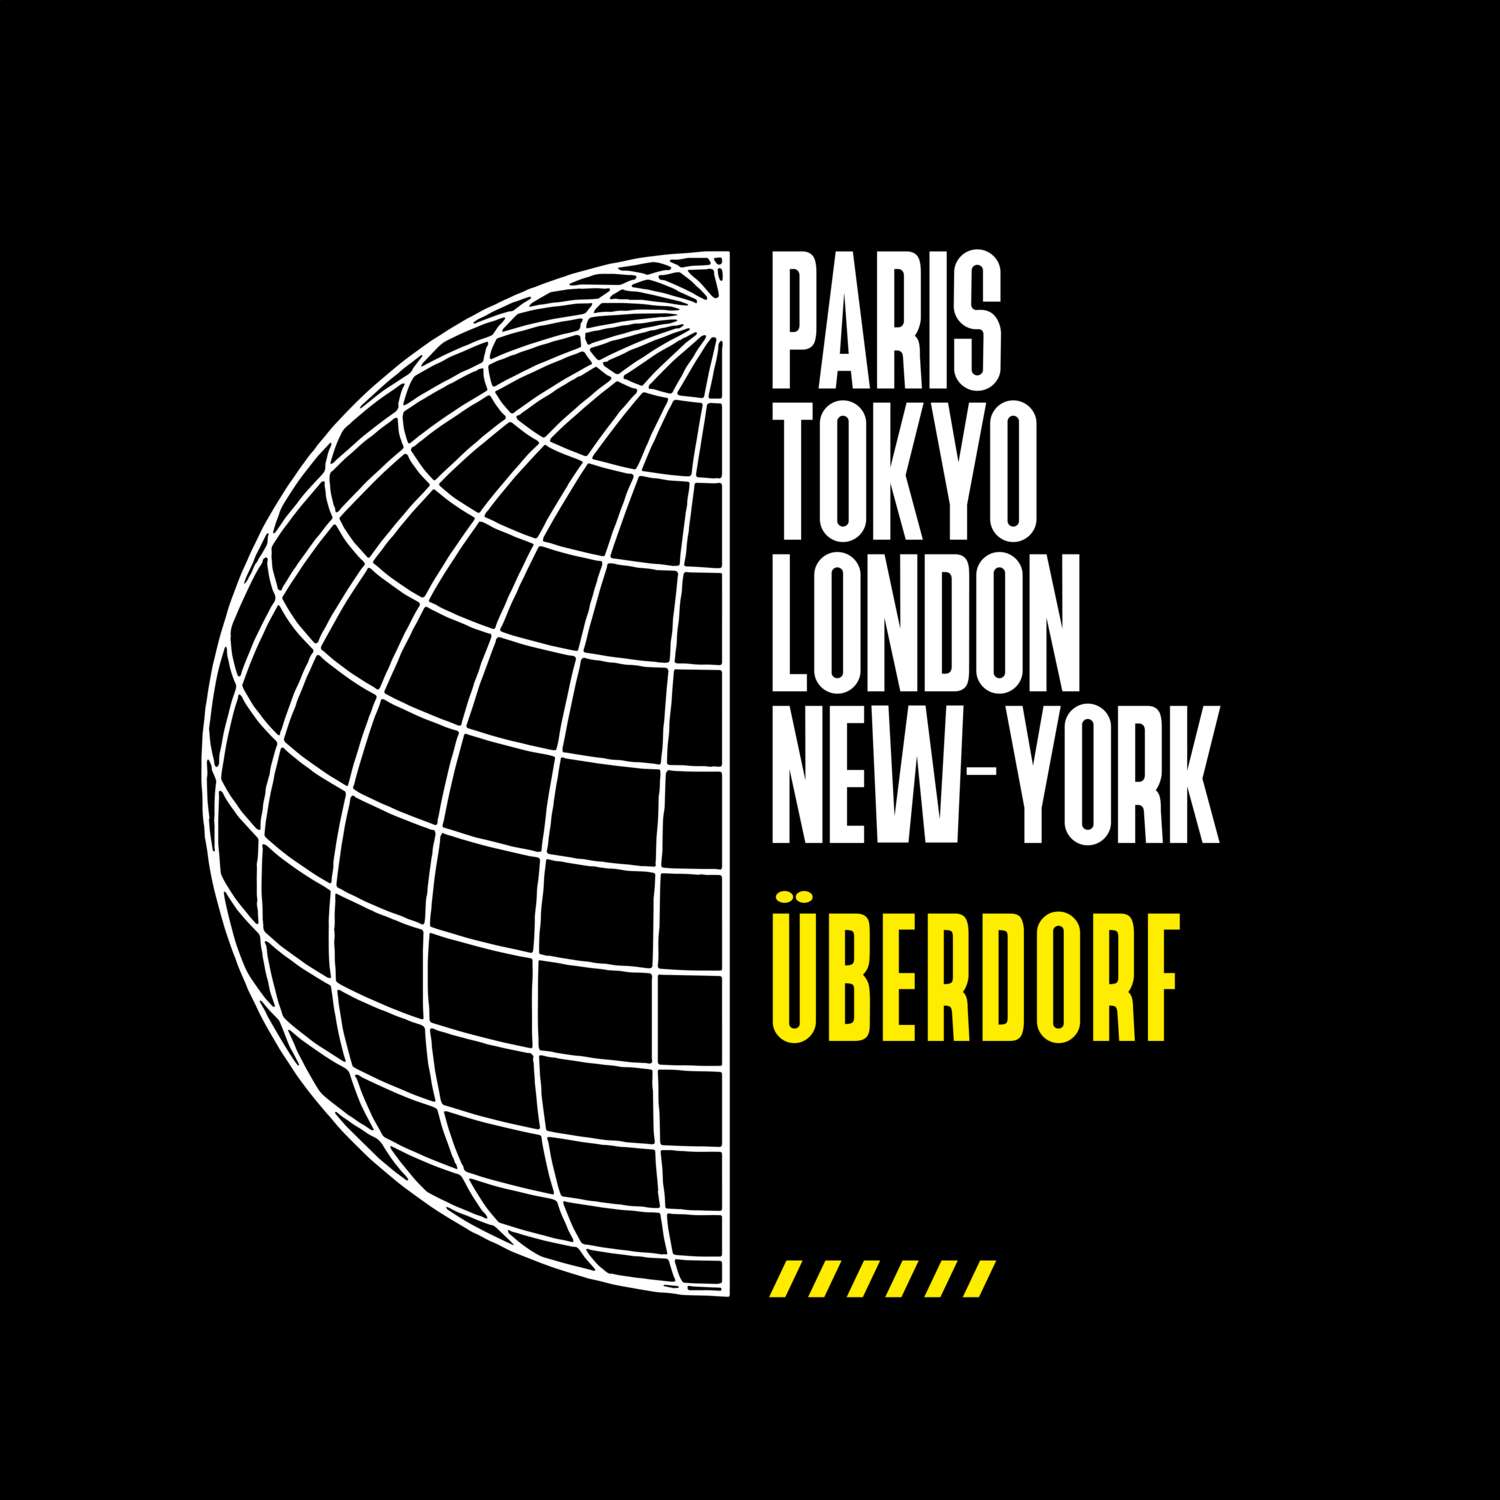 Überdorf T-Shirt »Paris Tokyo London«